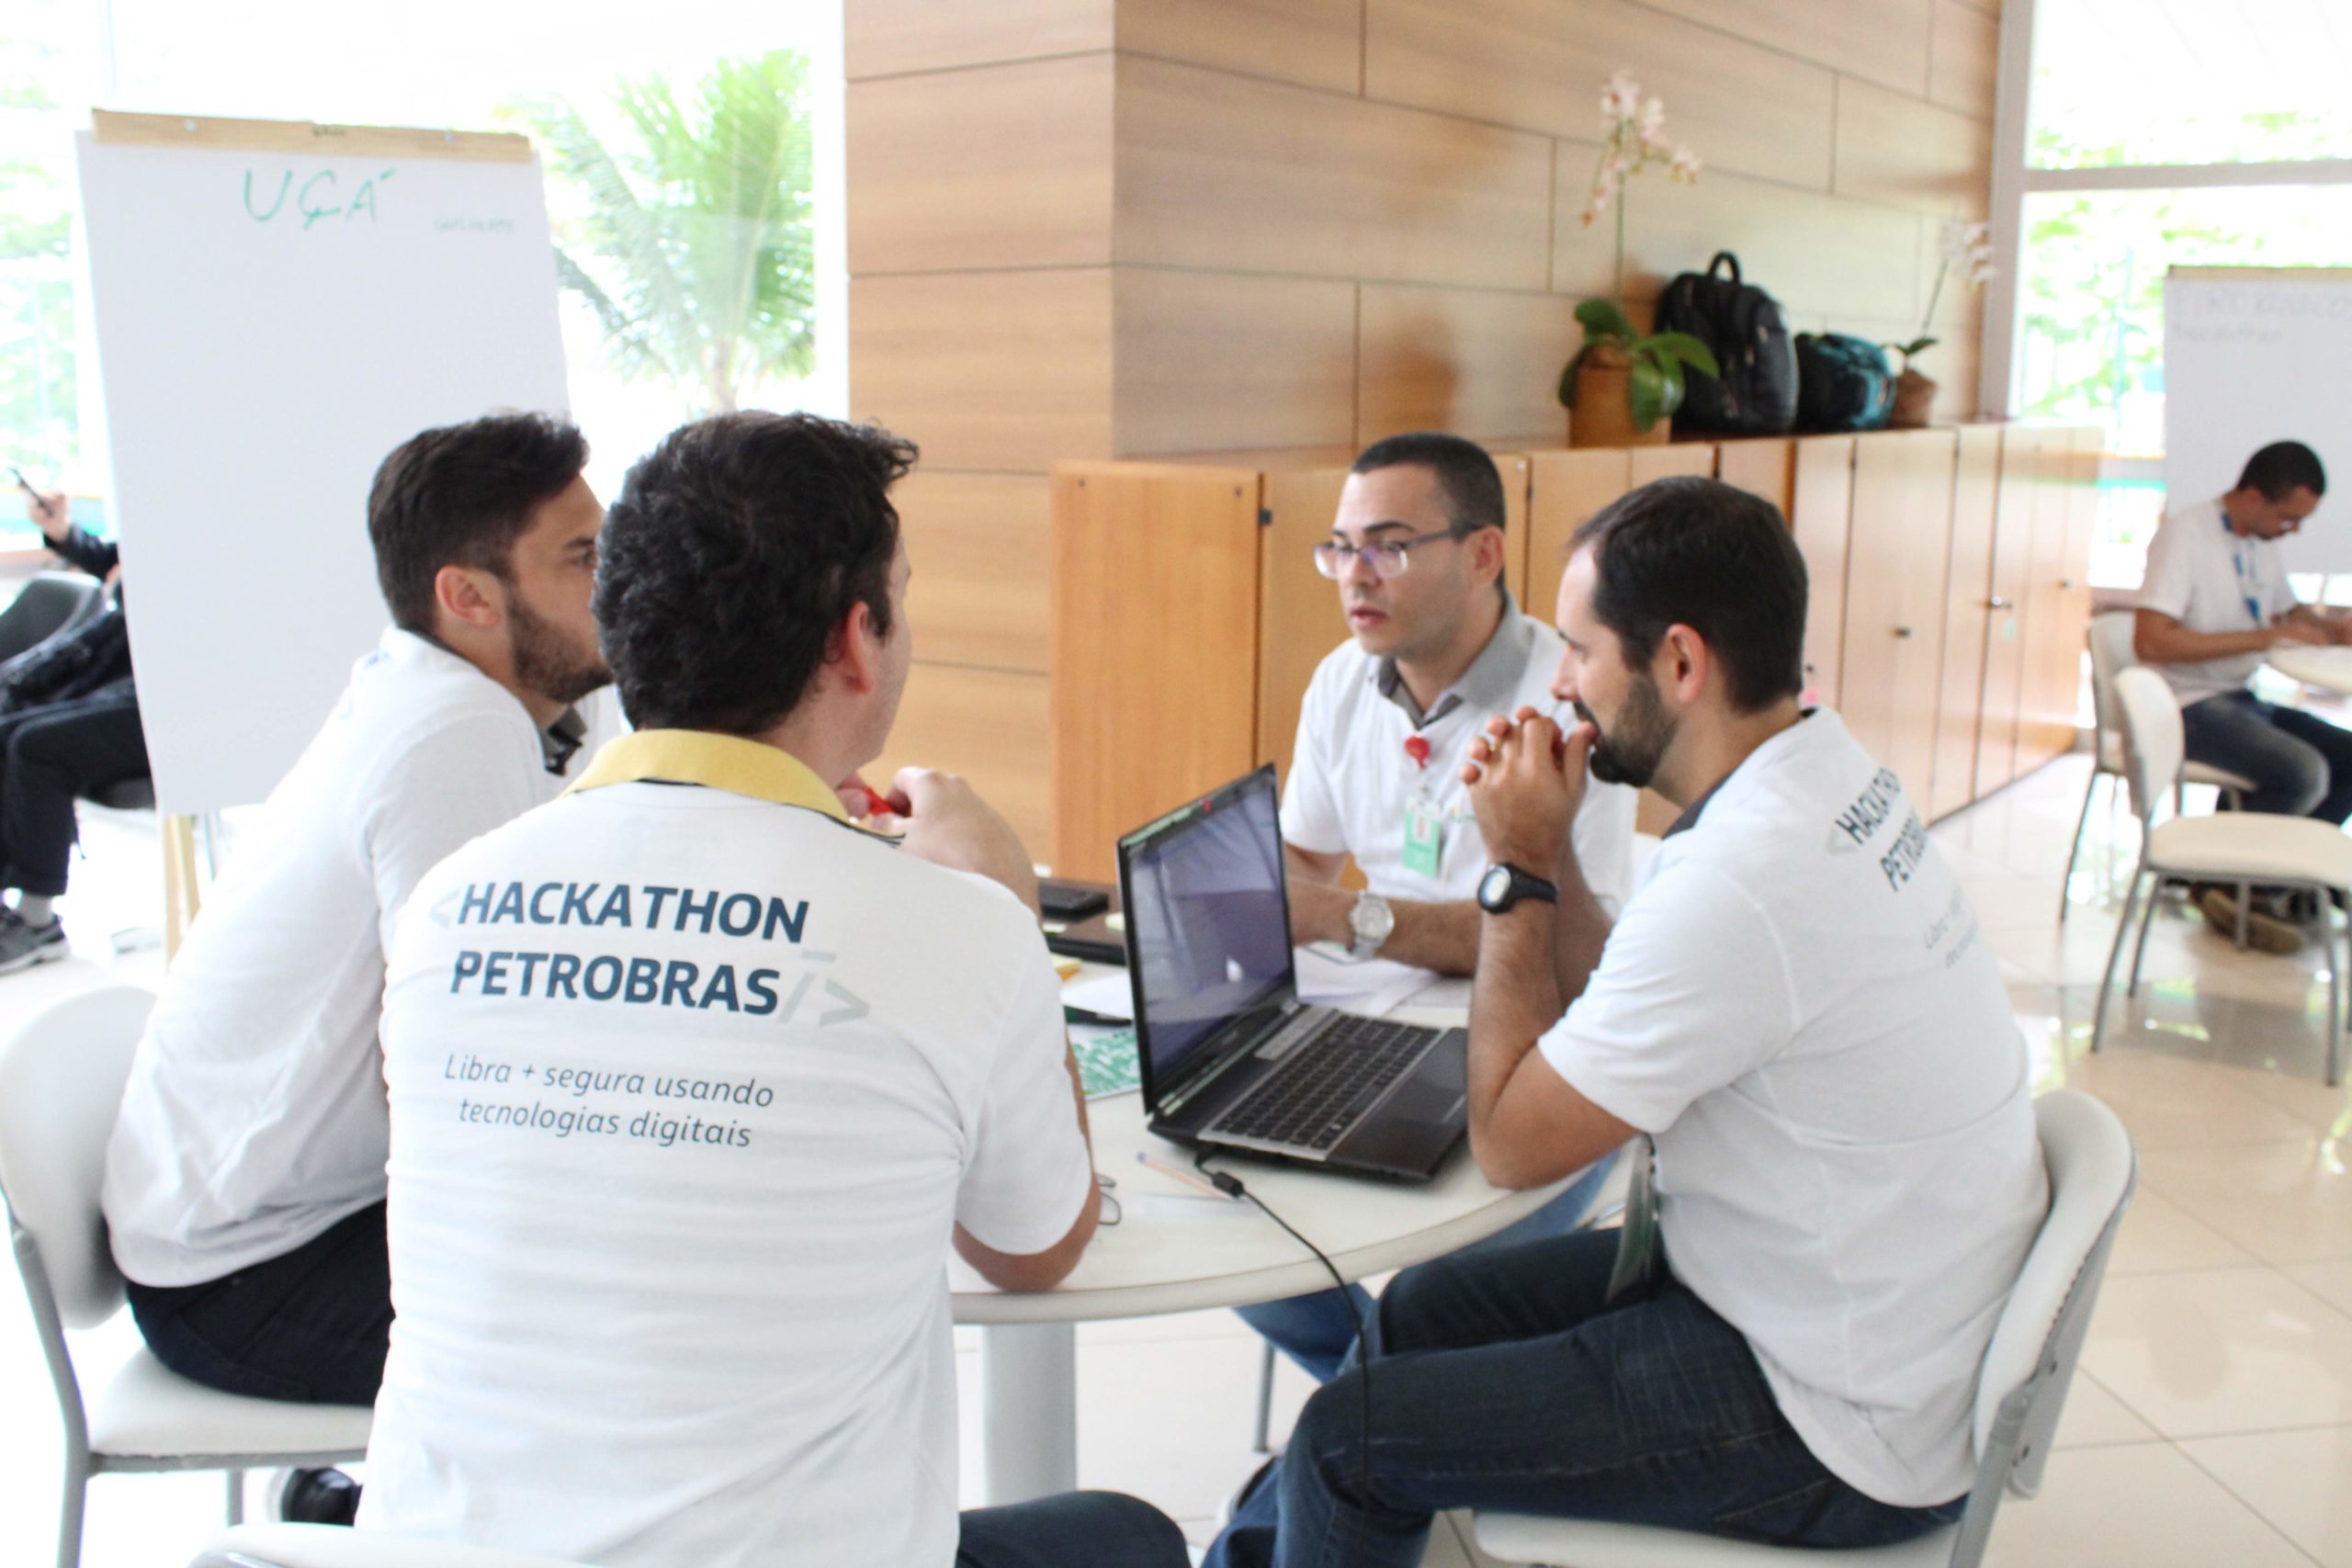 Hackathon Petrobras | Hackathon Brasil